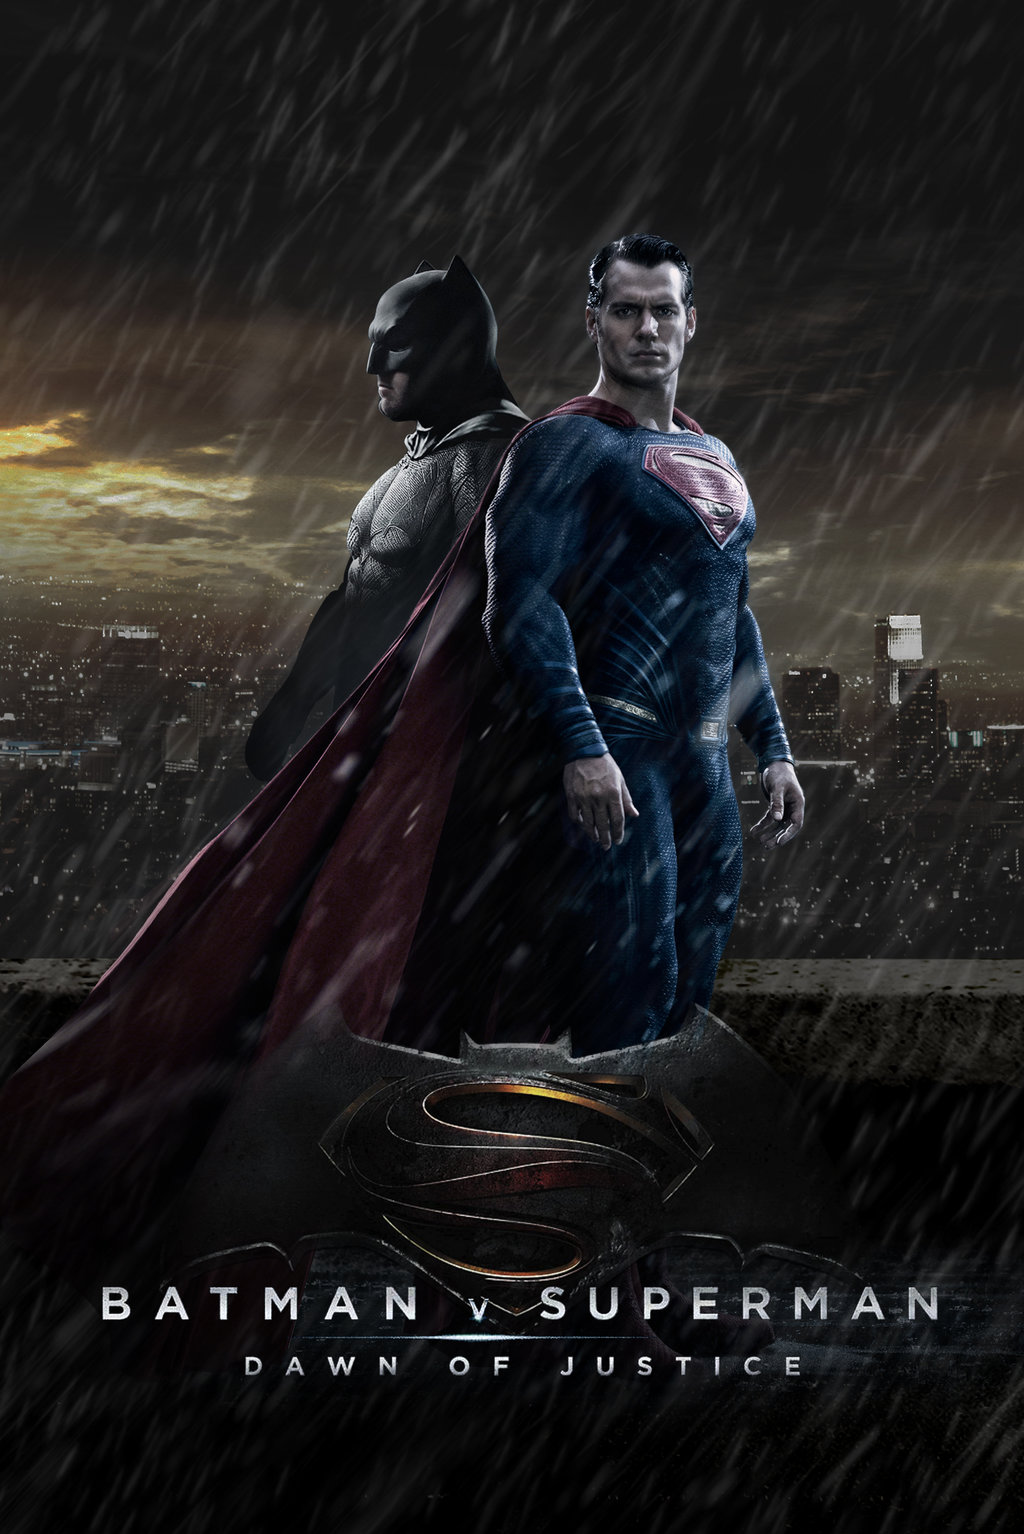 Batman vs Superman HQ Wallpapers | Full HD Pictures